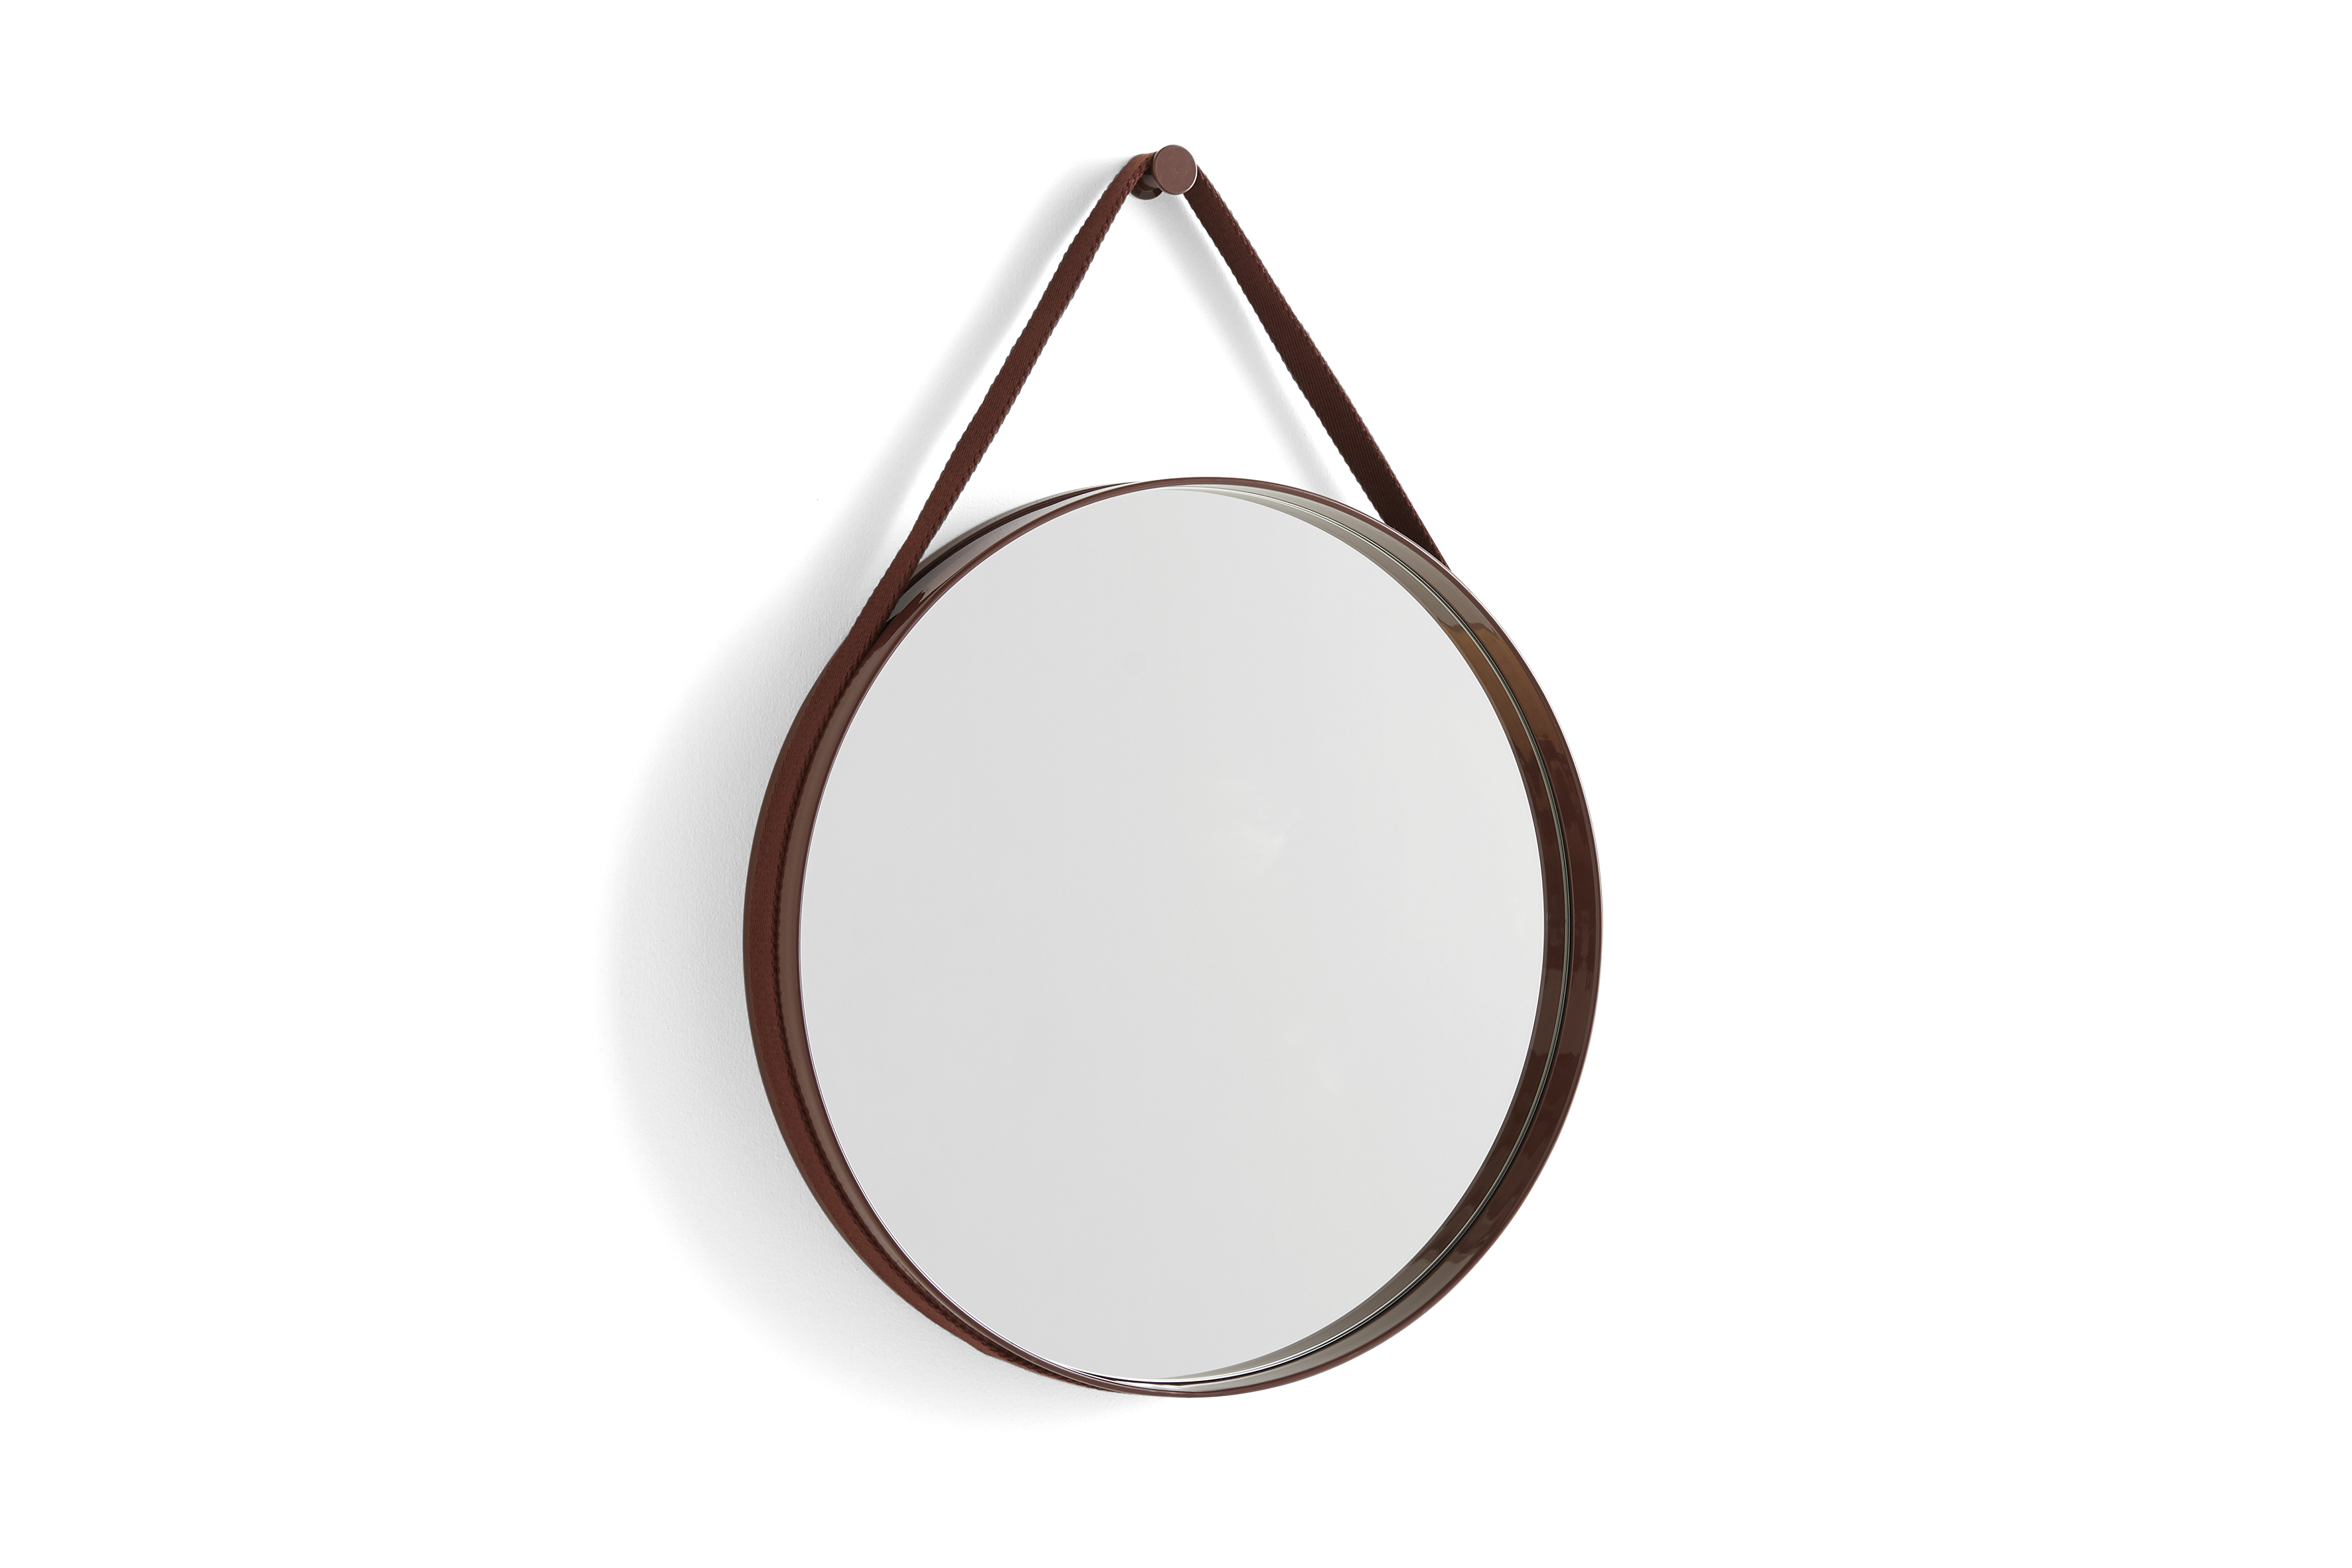 11: HAY - Strap Mirror Spejl No 2 Ø50 cm - Mørk brun